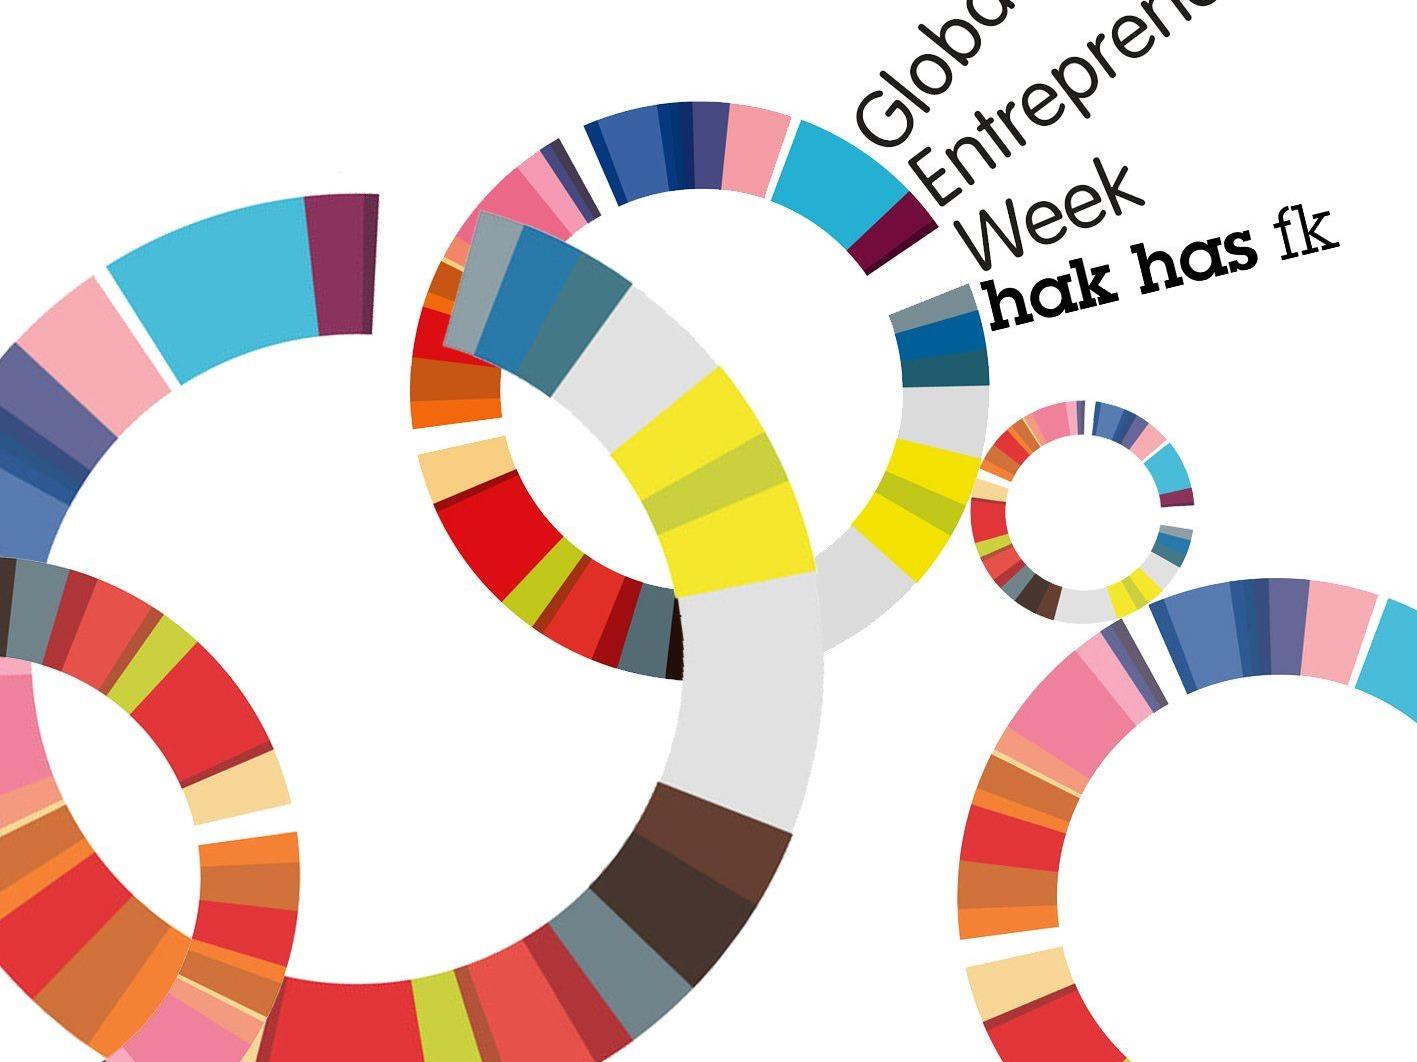 Global Entrepreneurship Week 2014 an der hak has fk